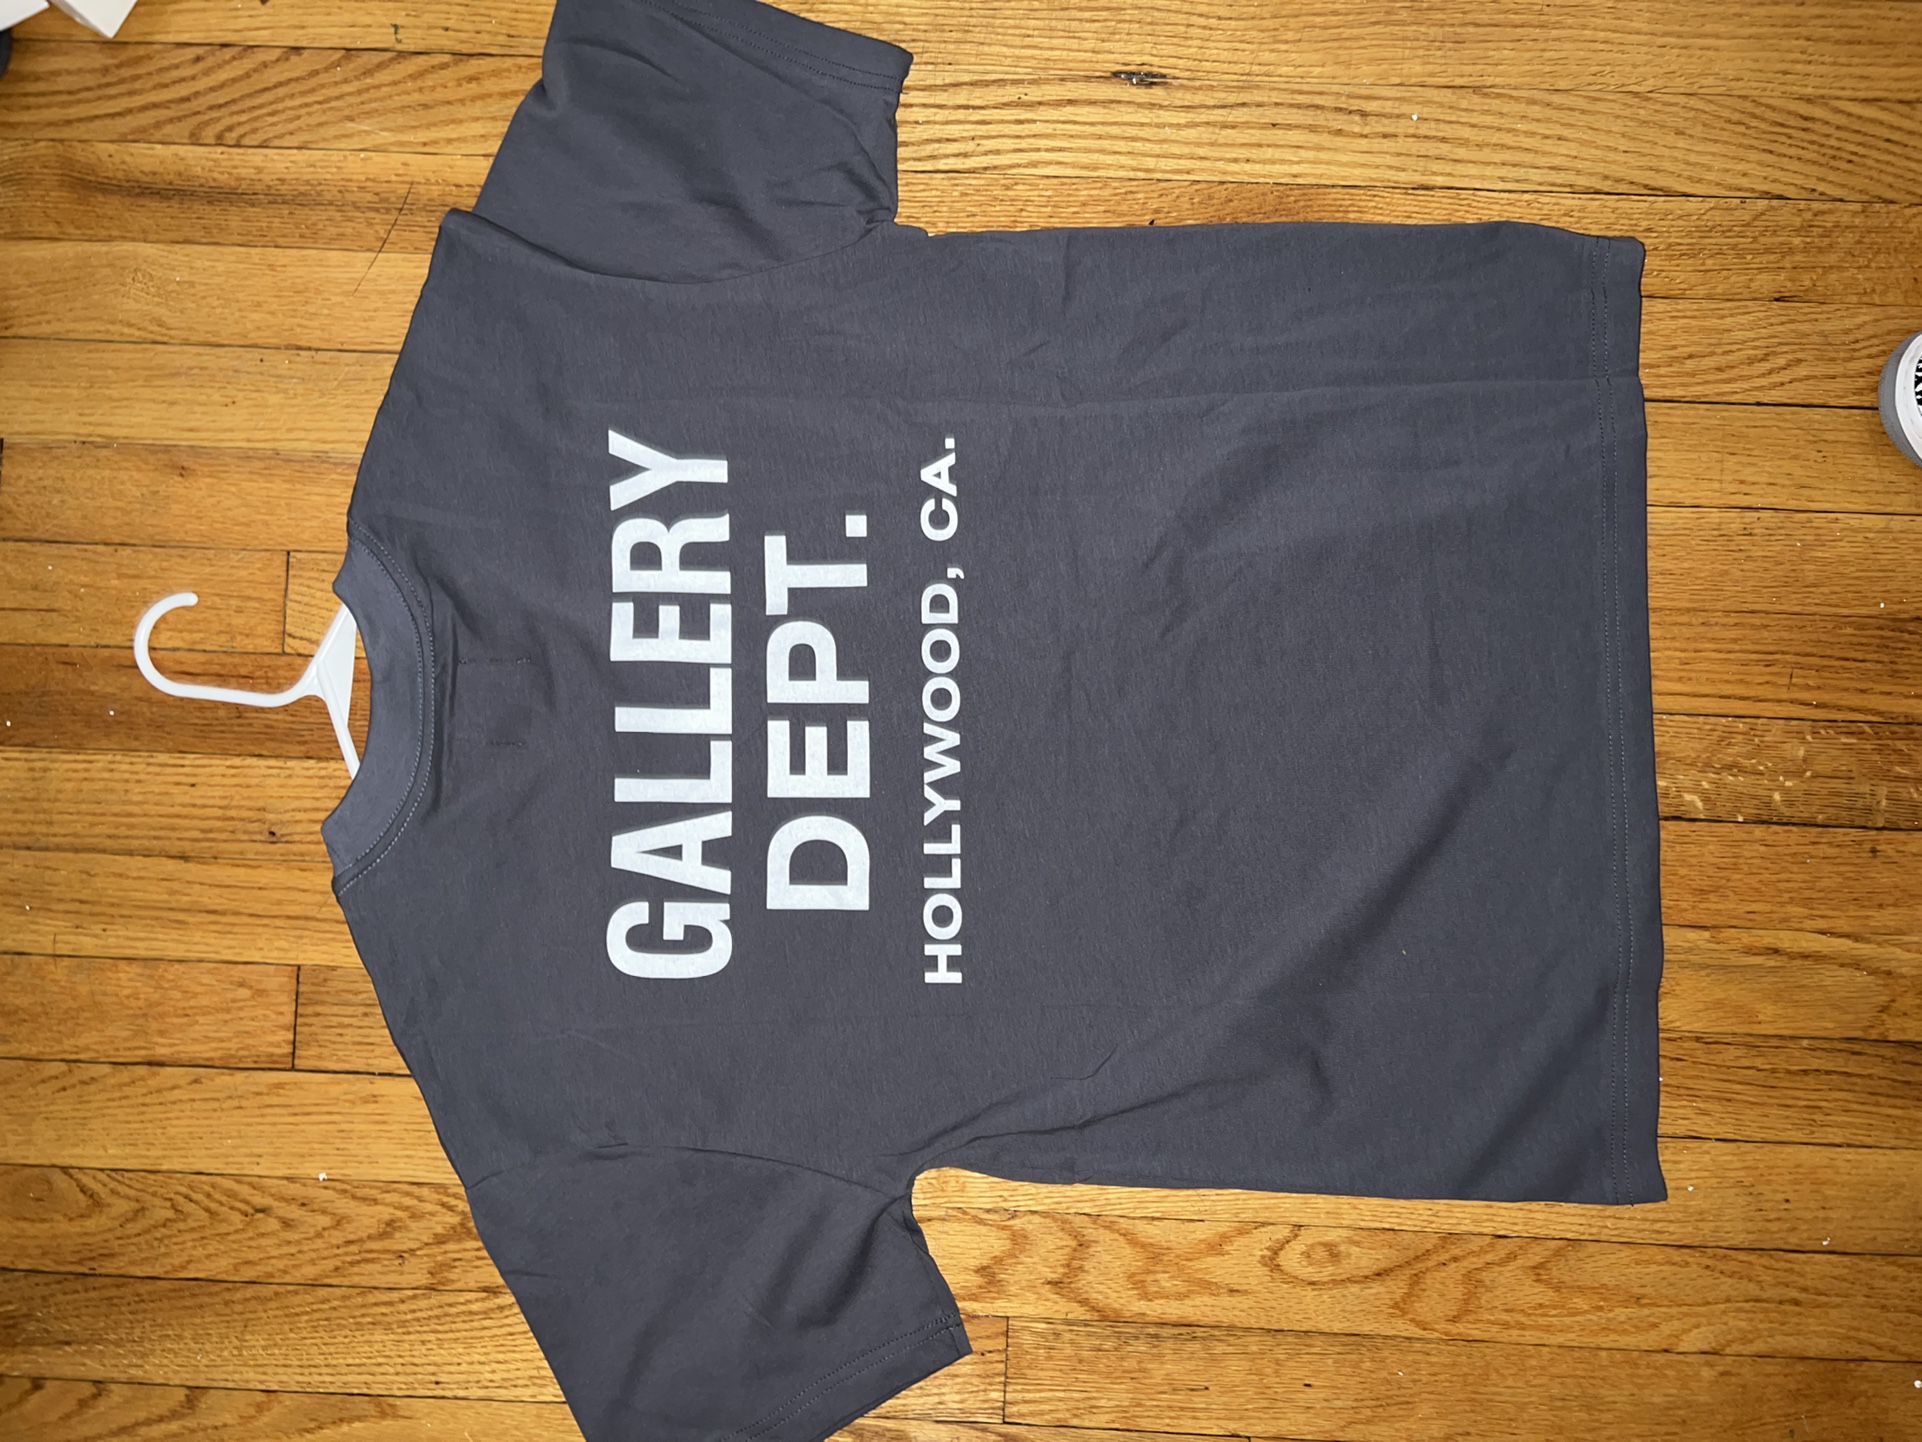 Gallery Department shirt BRAND NEW 